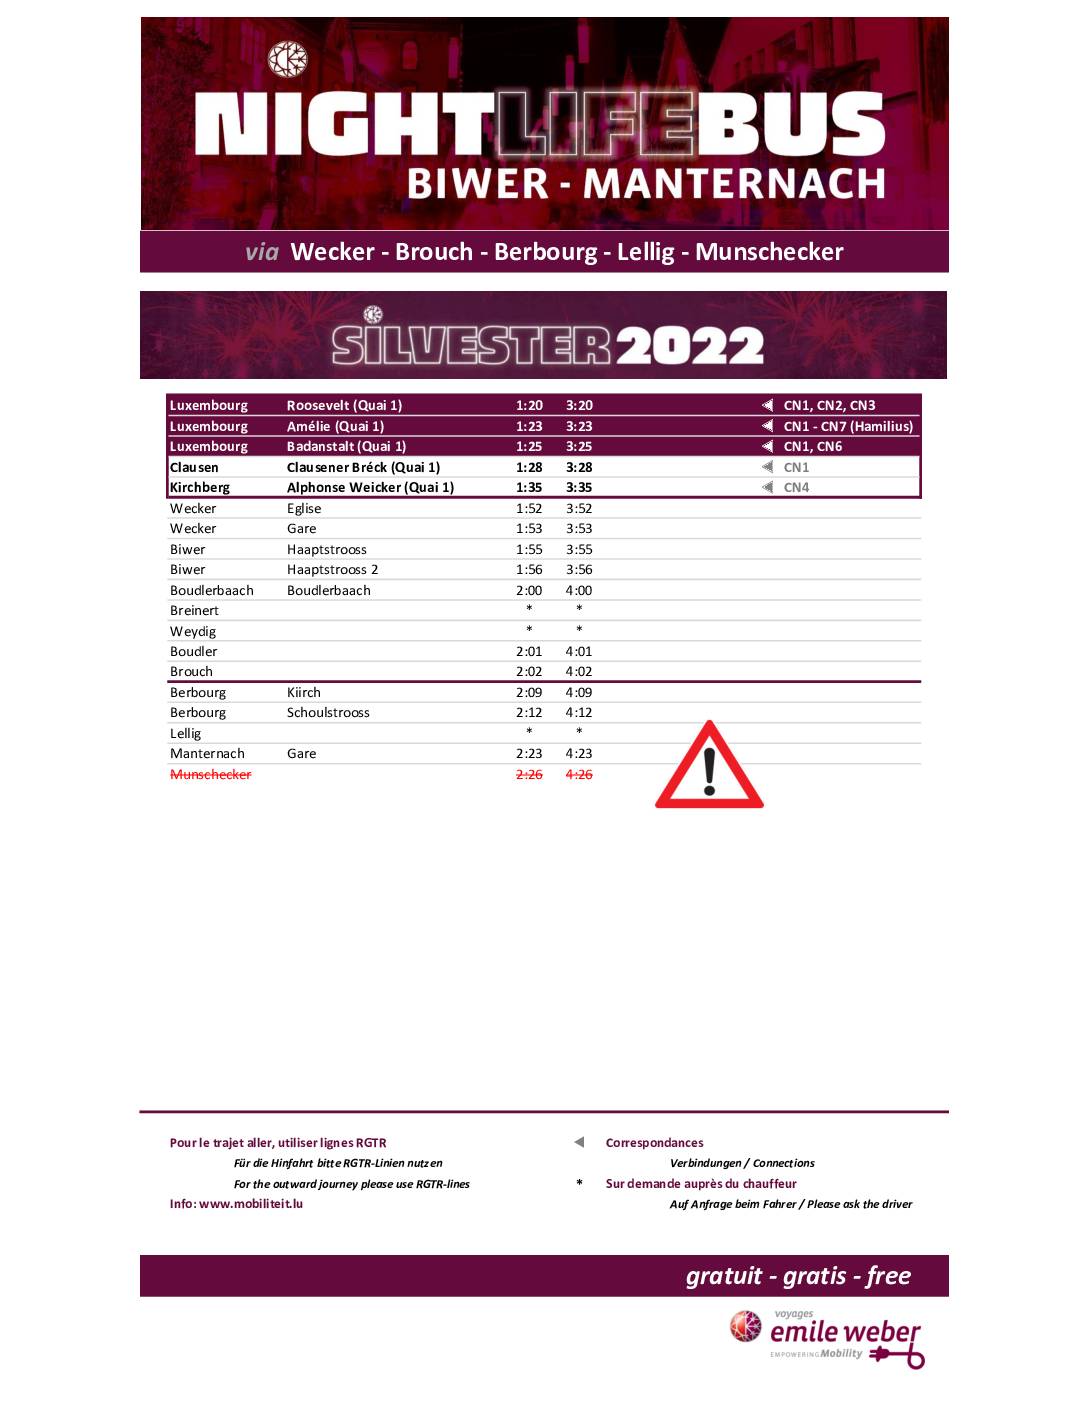 2022.12.19_NLB Biwer-Manternach Silvester 2022